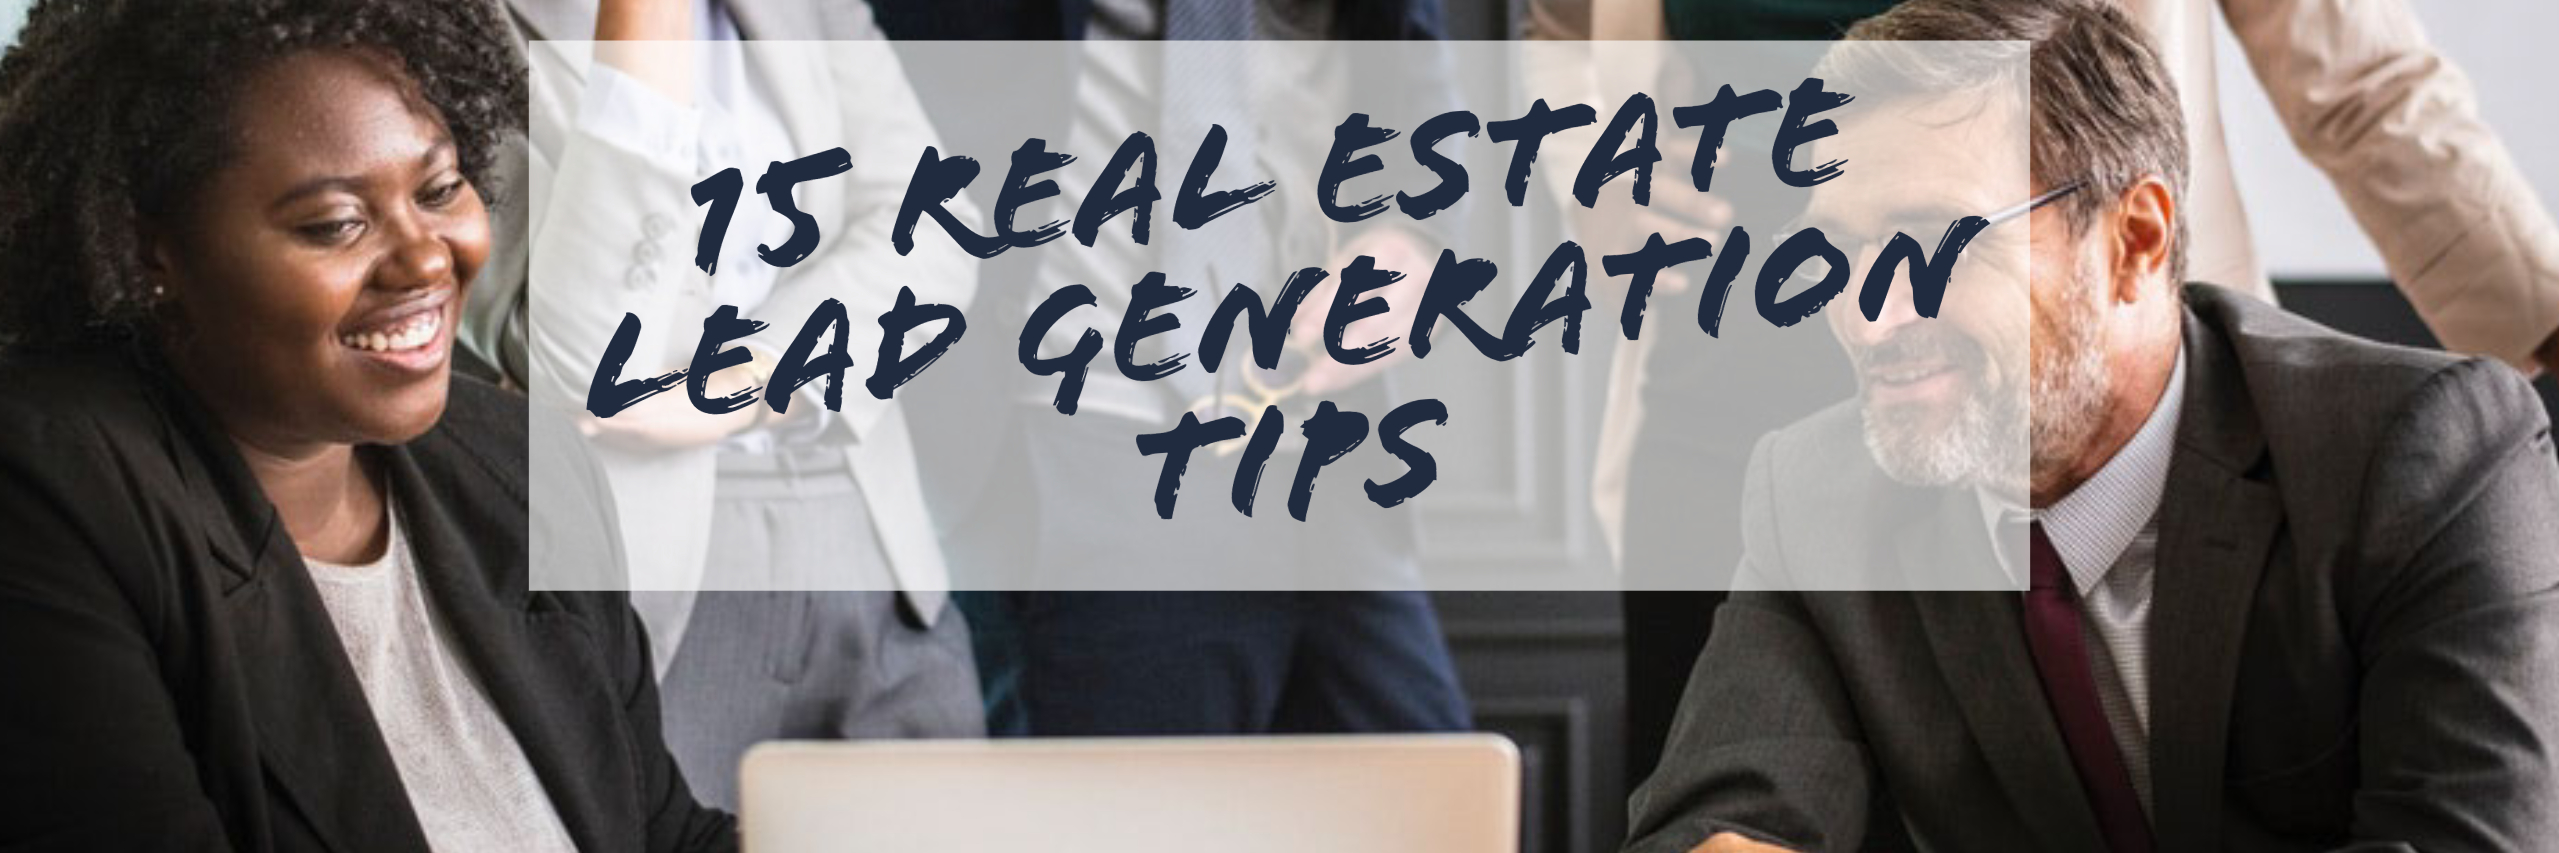 15 Lead Generation Tips 